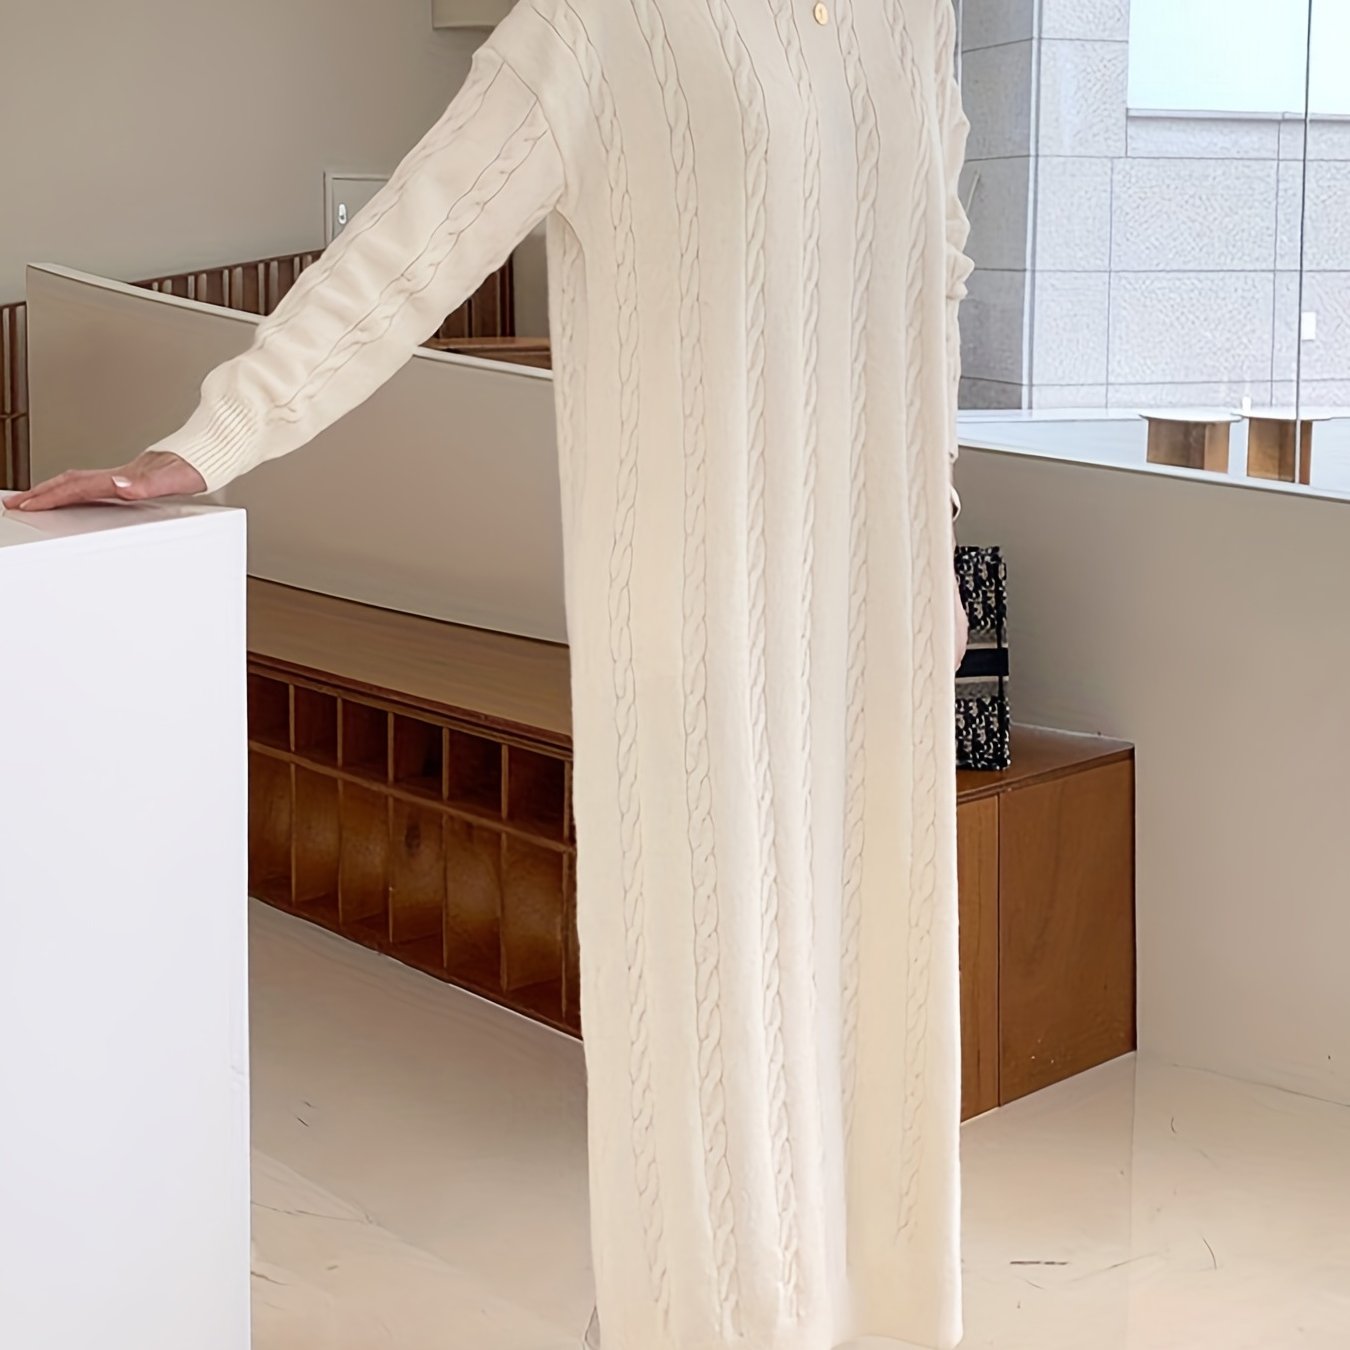 Antmvs Split Cable Knit Dress, Elegant Solid Long Sleeve Maxi Dress, Women's Clothing